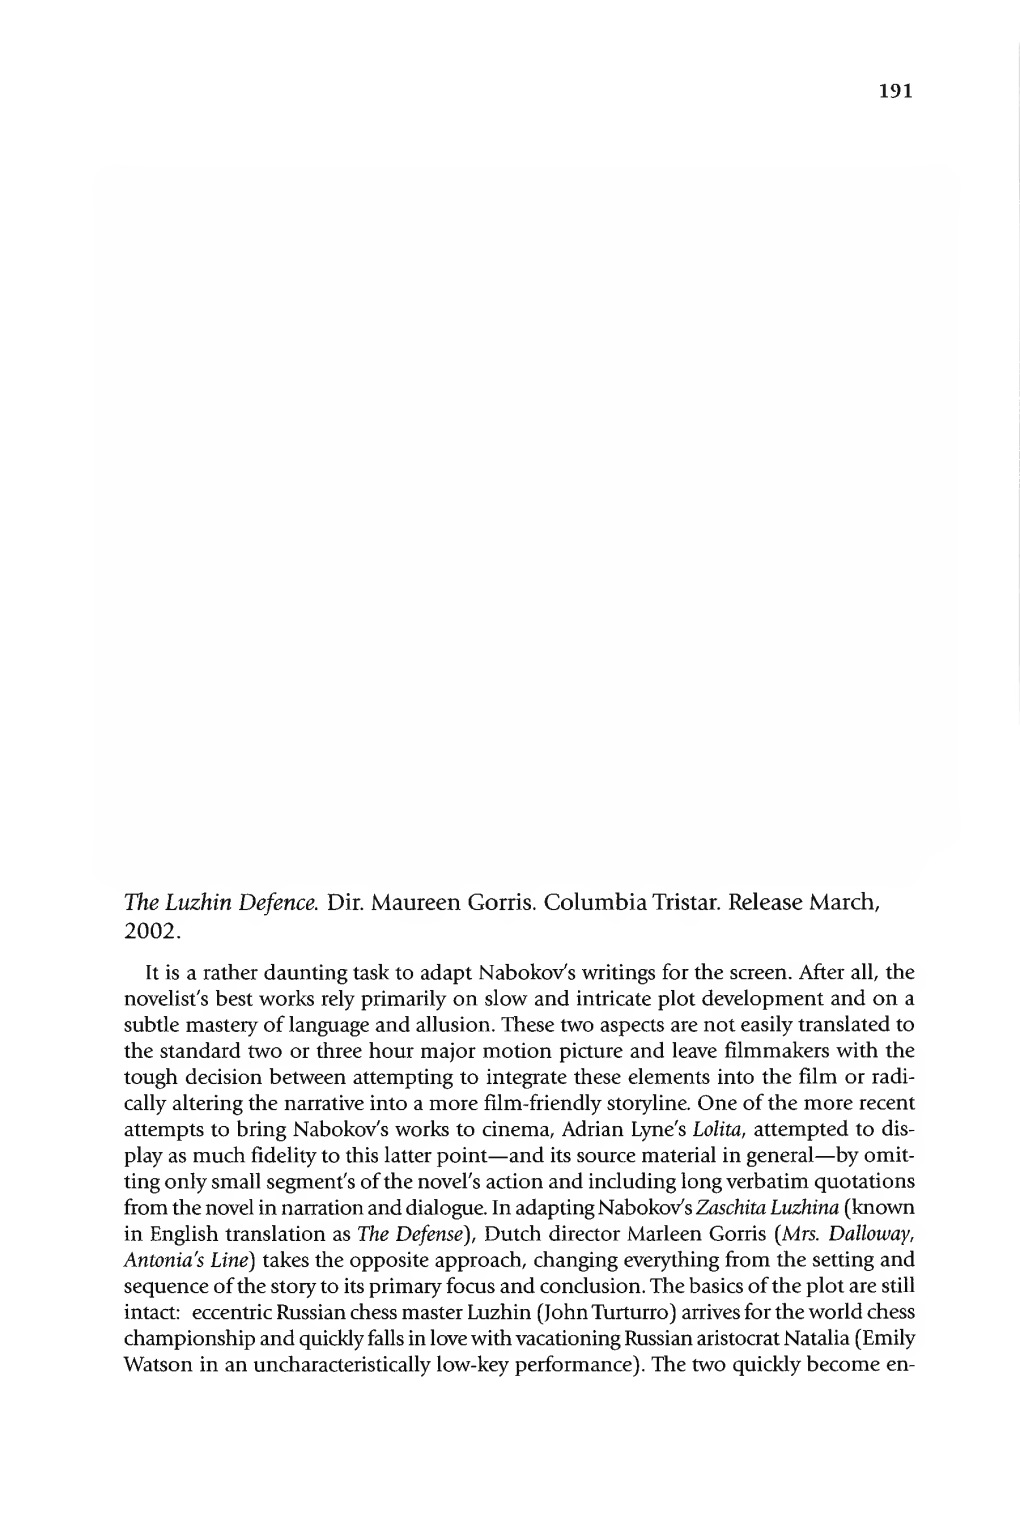 The Luzhin Defence. Dir. Maureen Gorris. Columbia Tristar. Release March, 2002